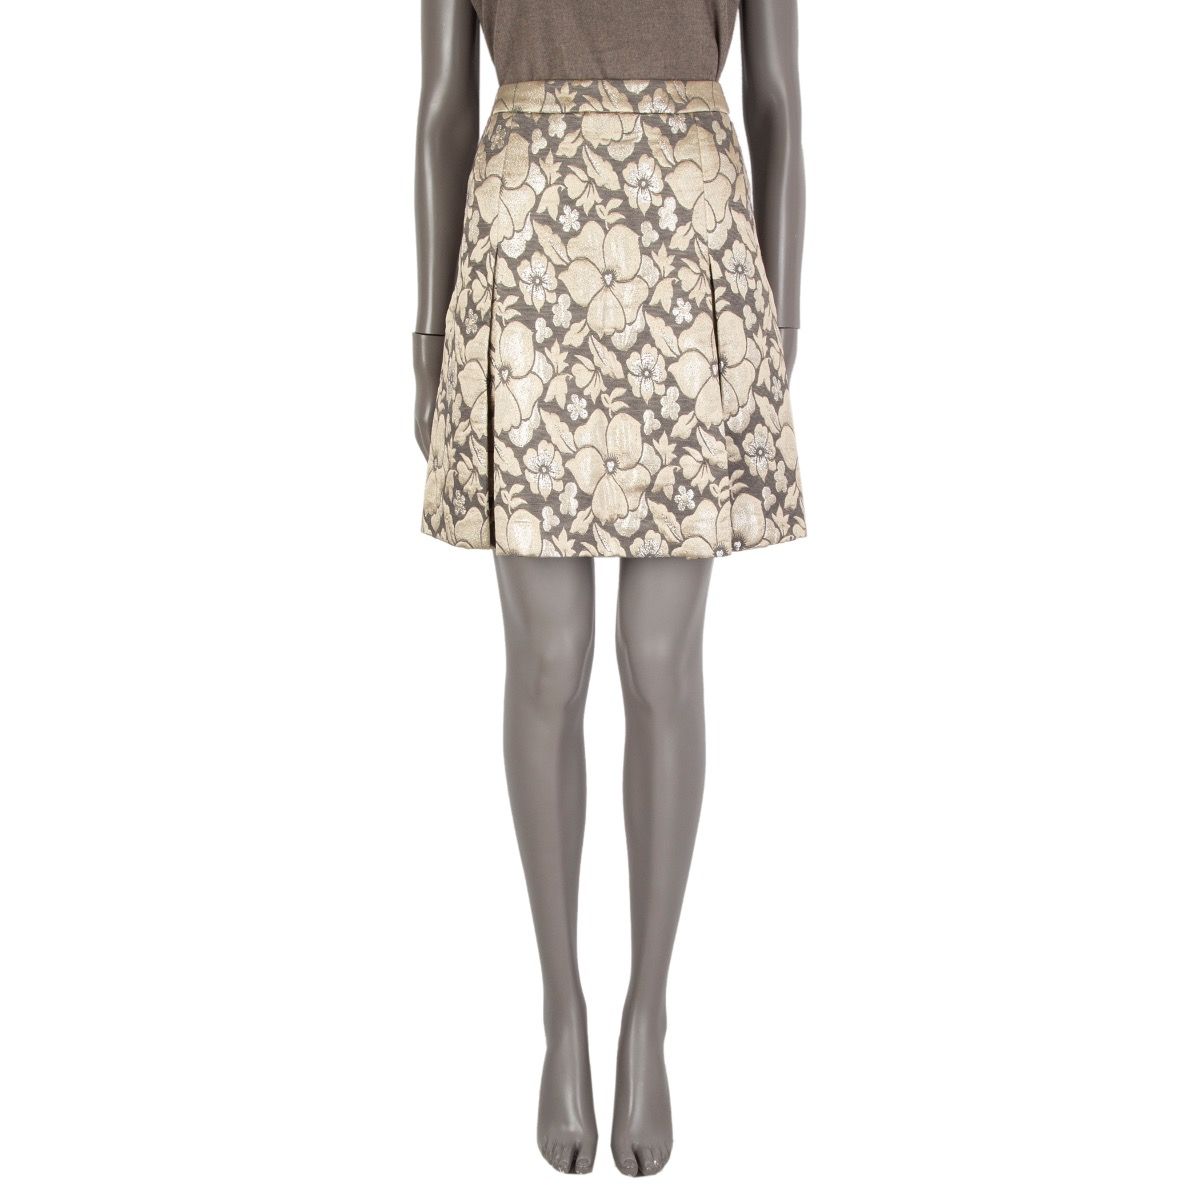 Miu Miu Brocade Box-Pleated Skirt